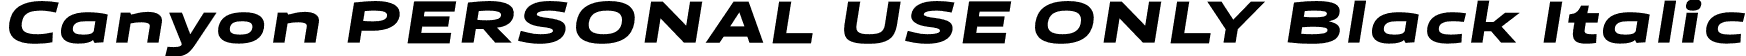 Canyon PERSONAL USE ONLY Black Italic font | CanyonPersonalUseOnlyBlackItalic-3z2Yz.otf